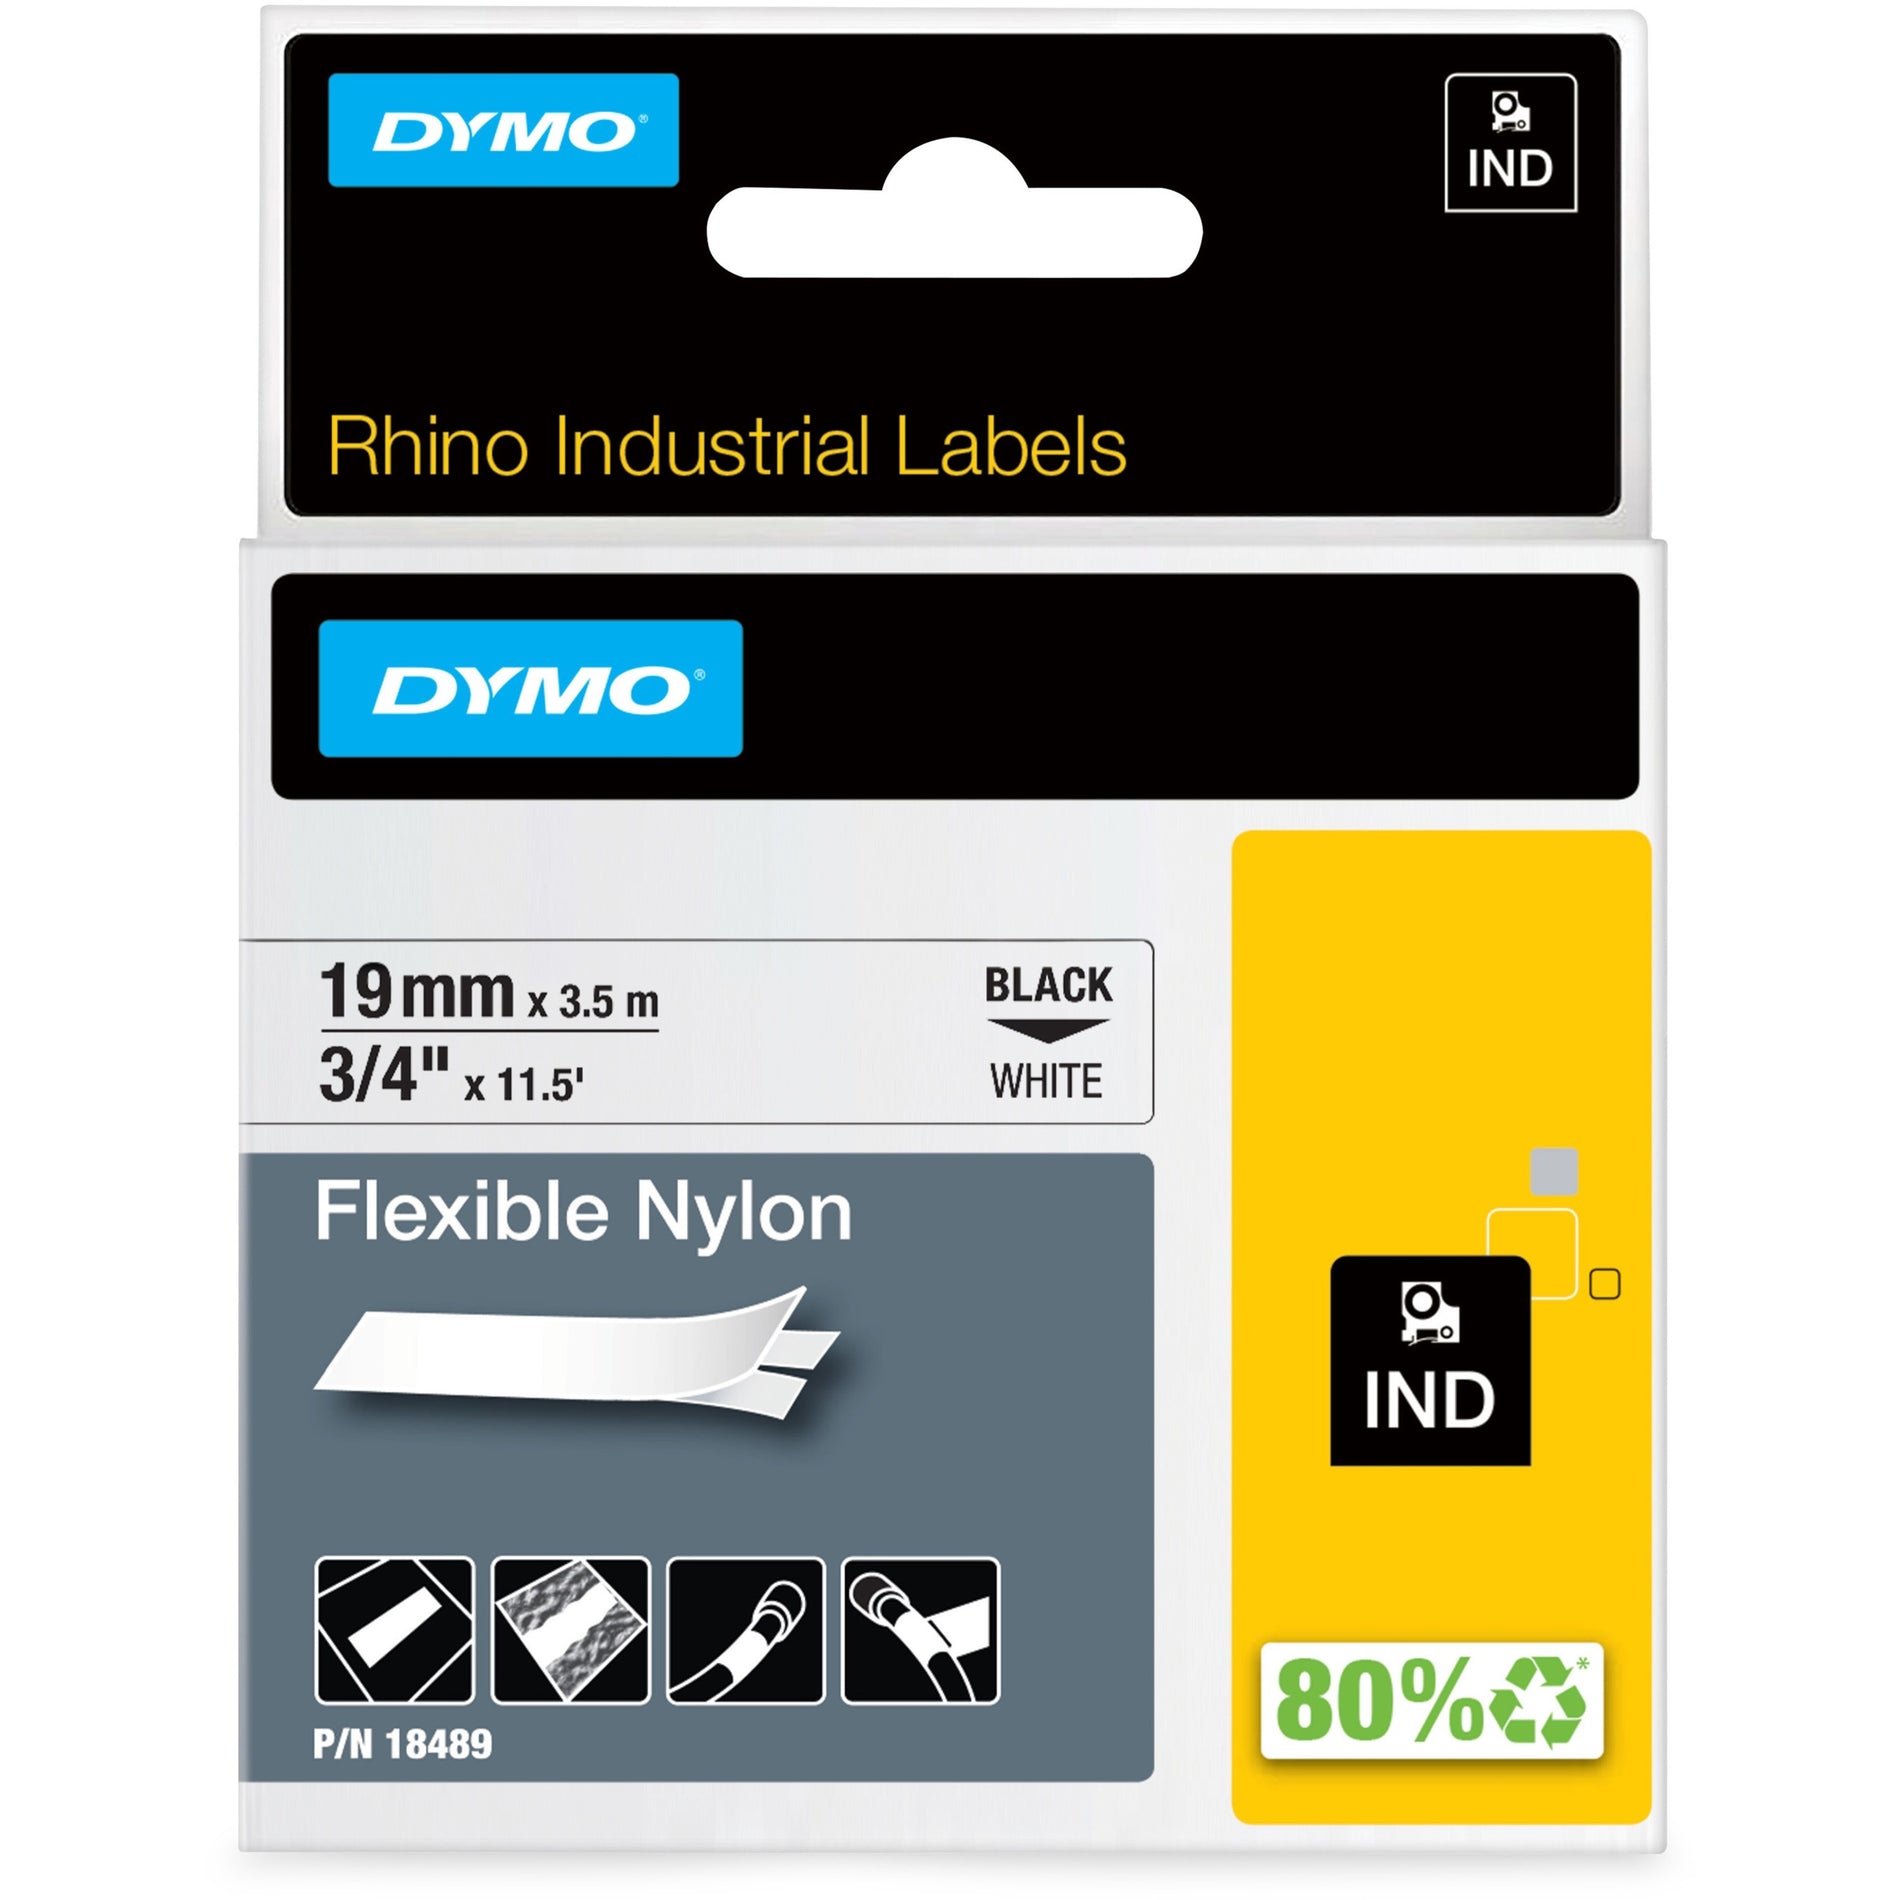 Dymo 18489 Rhino Flexible Nylon Labels, 3/4"x11.5', White, Temperature Resistant, Water Resistant